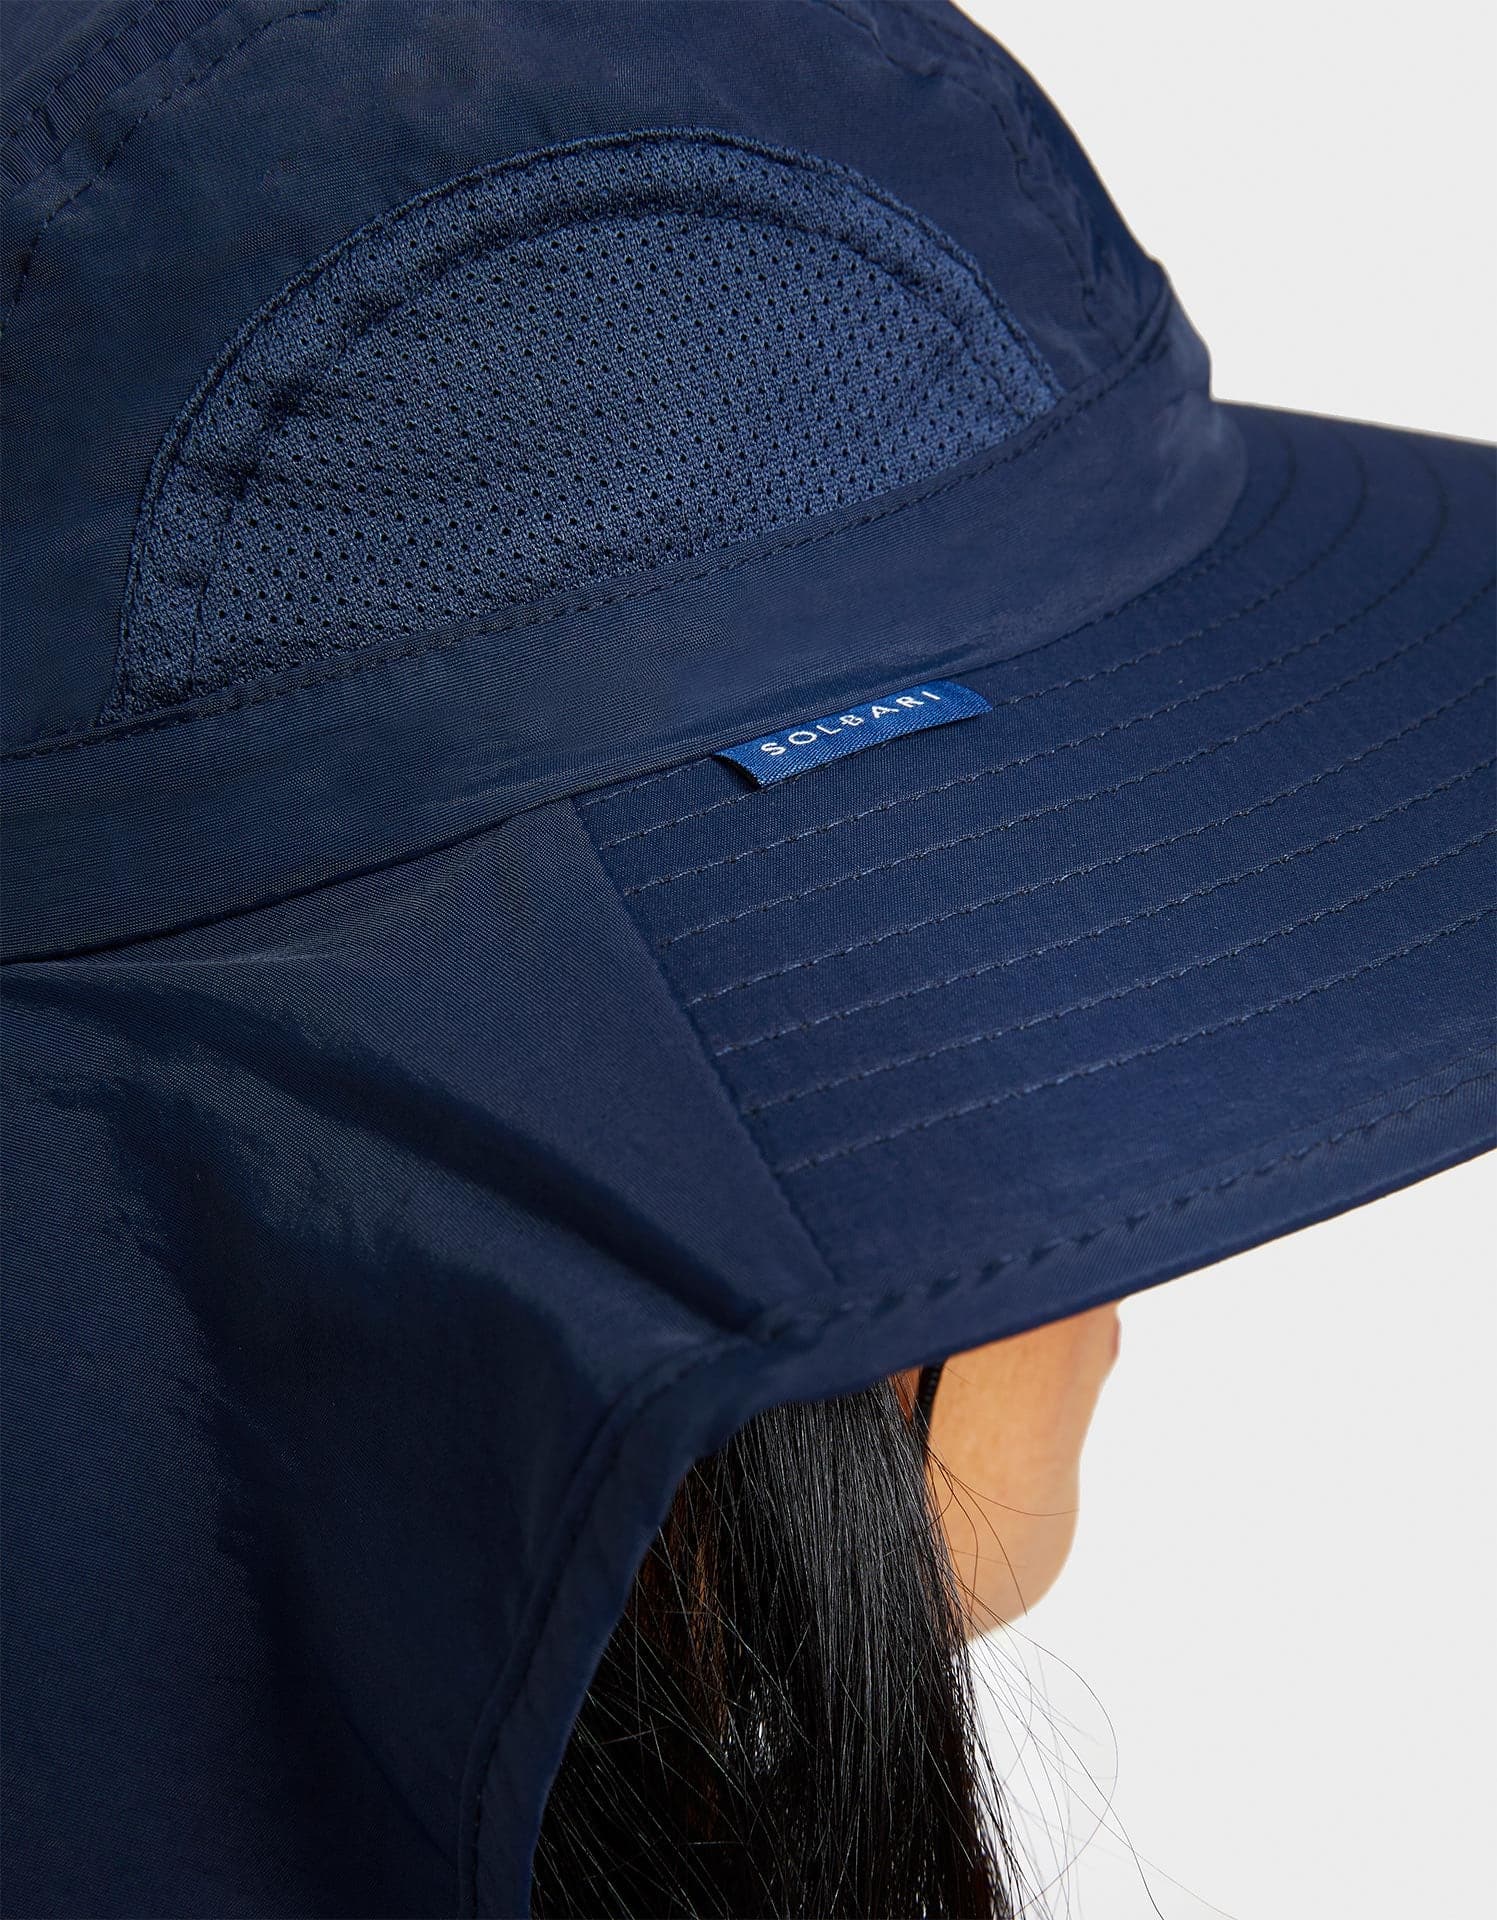 Australian Outback Sun Hat UPF50+ For Women | Sun Protection | Solbari